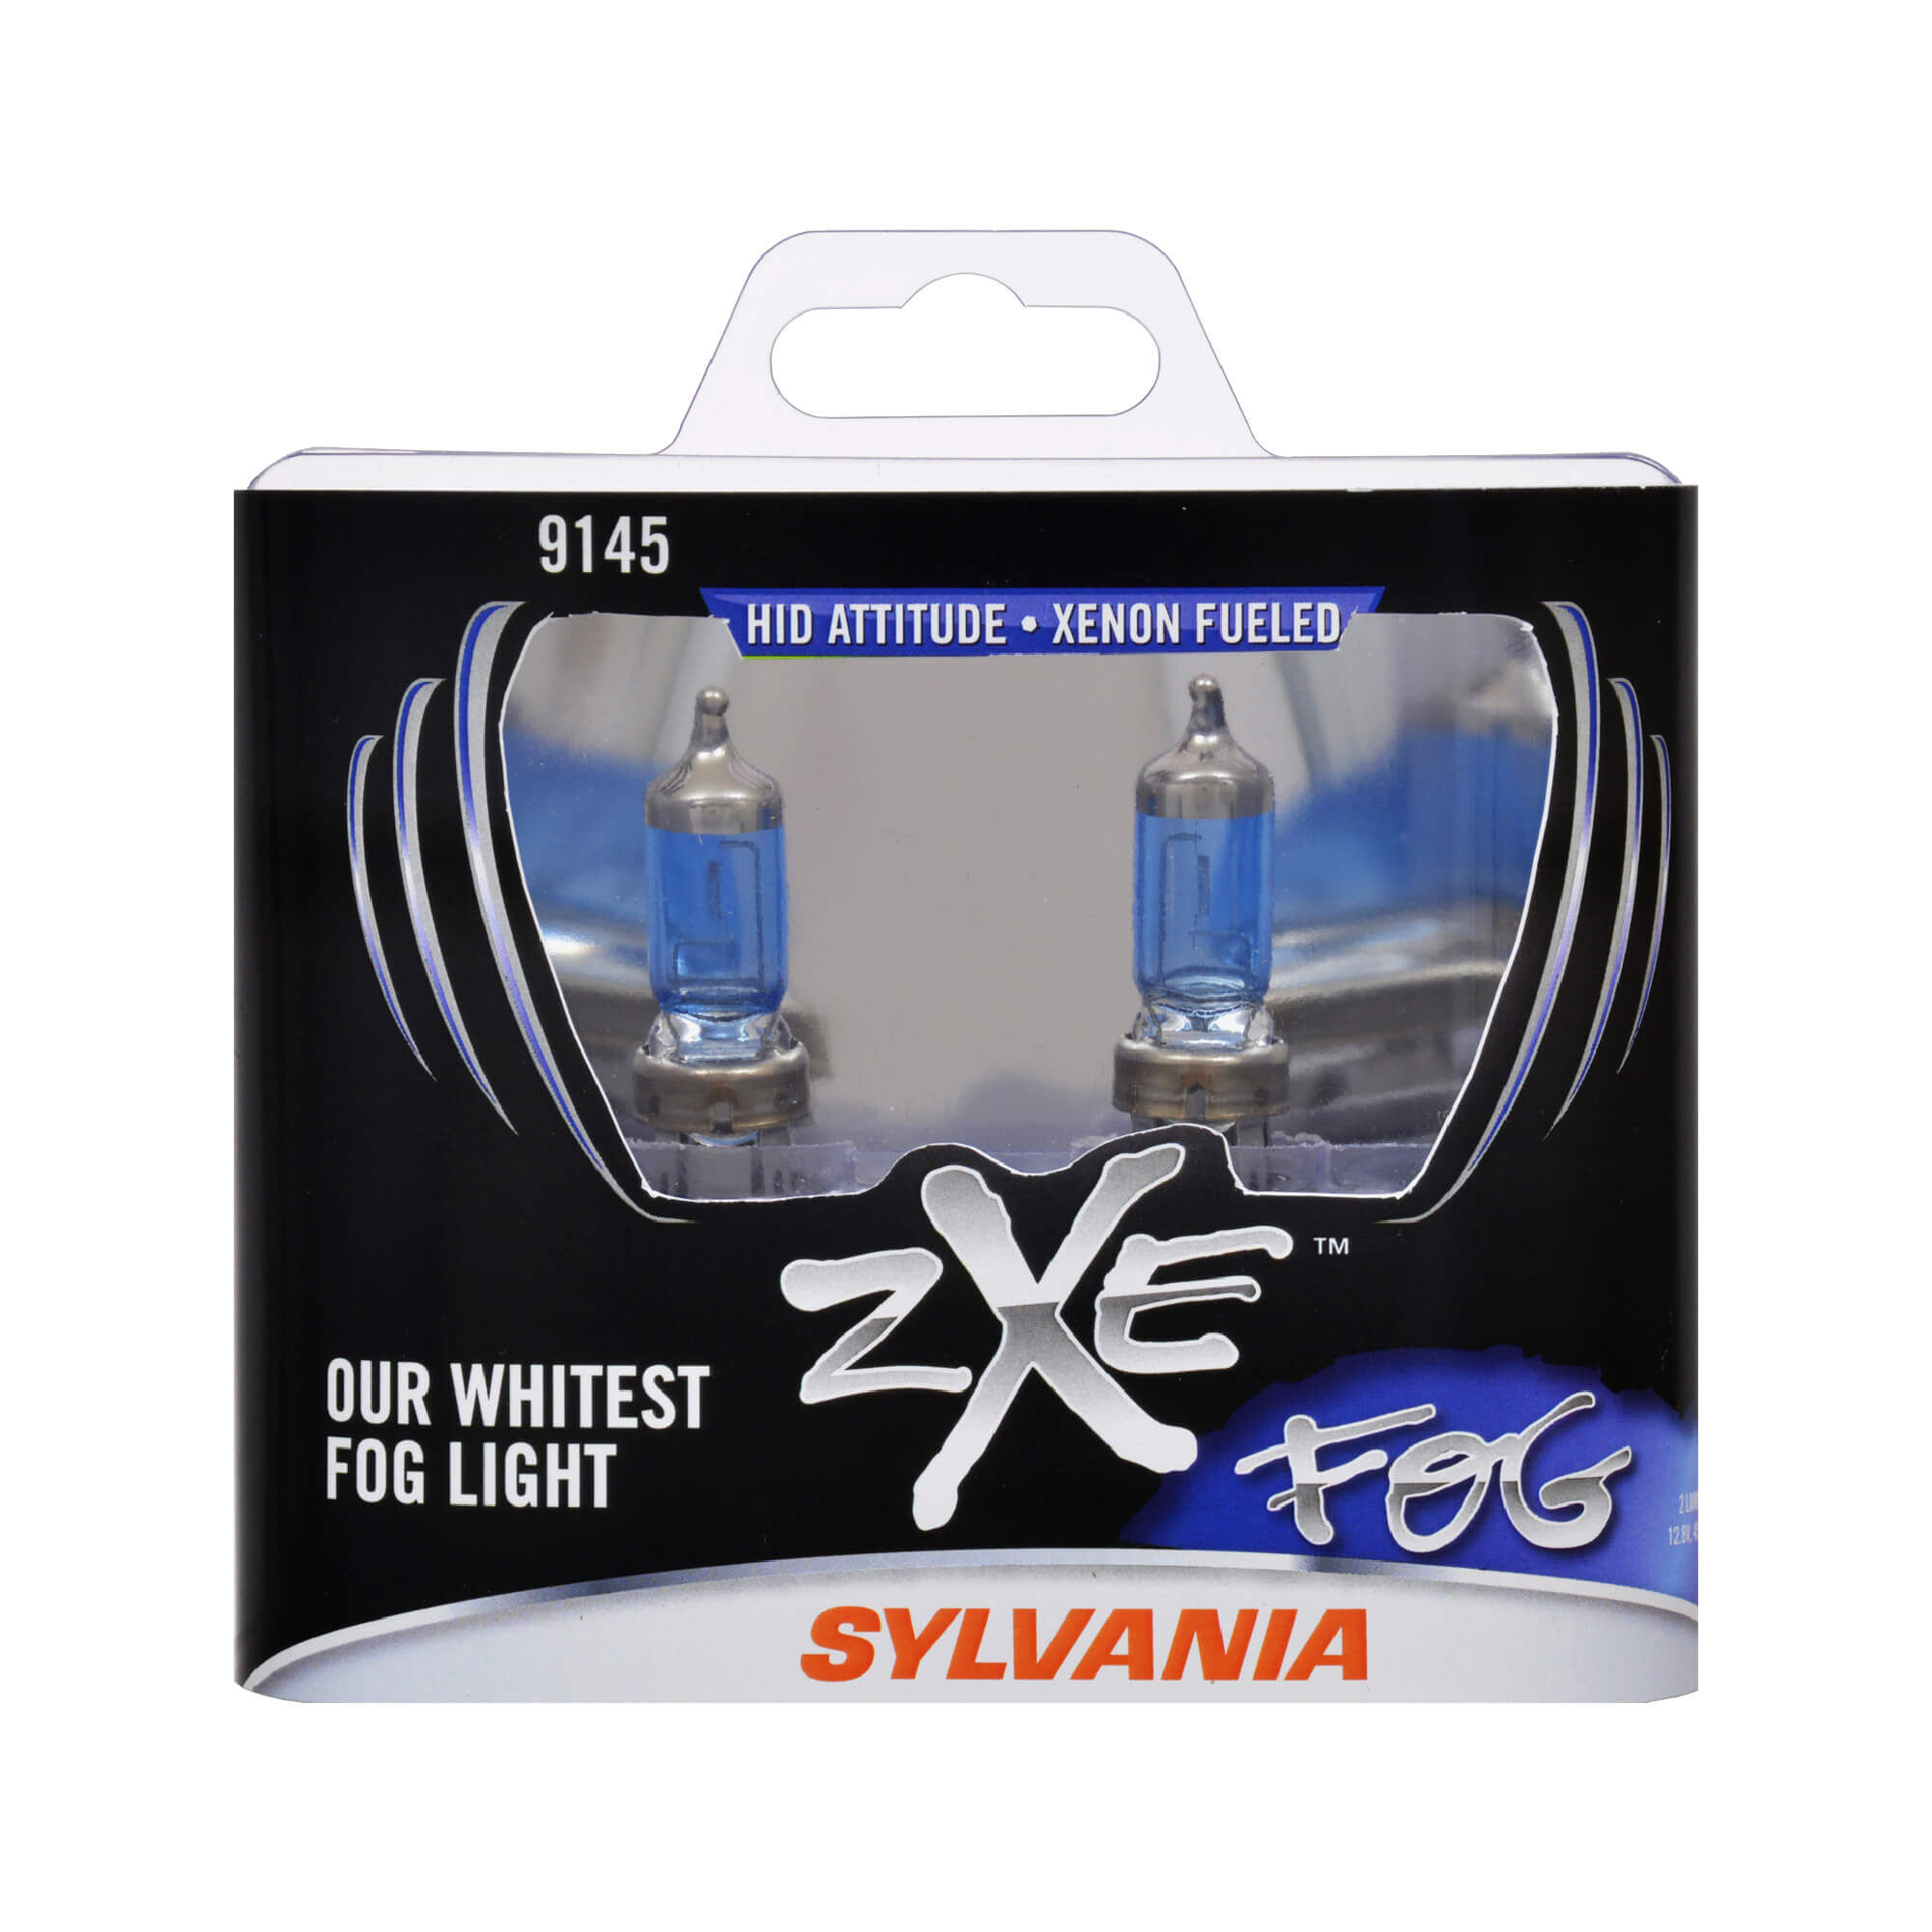 SYLVANIA 9145 SilverStar zXe Halogen Fog Bulb, 2 Pack